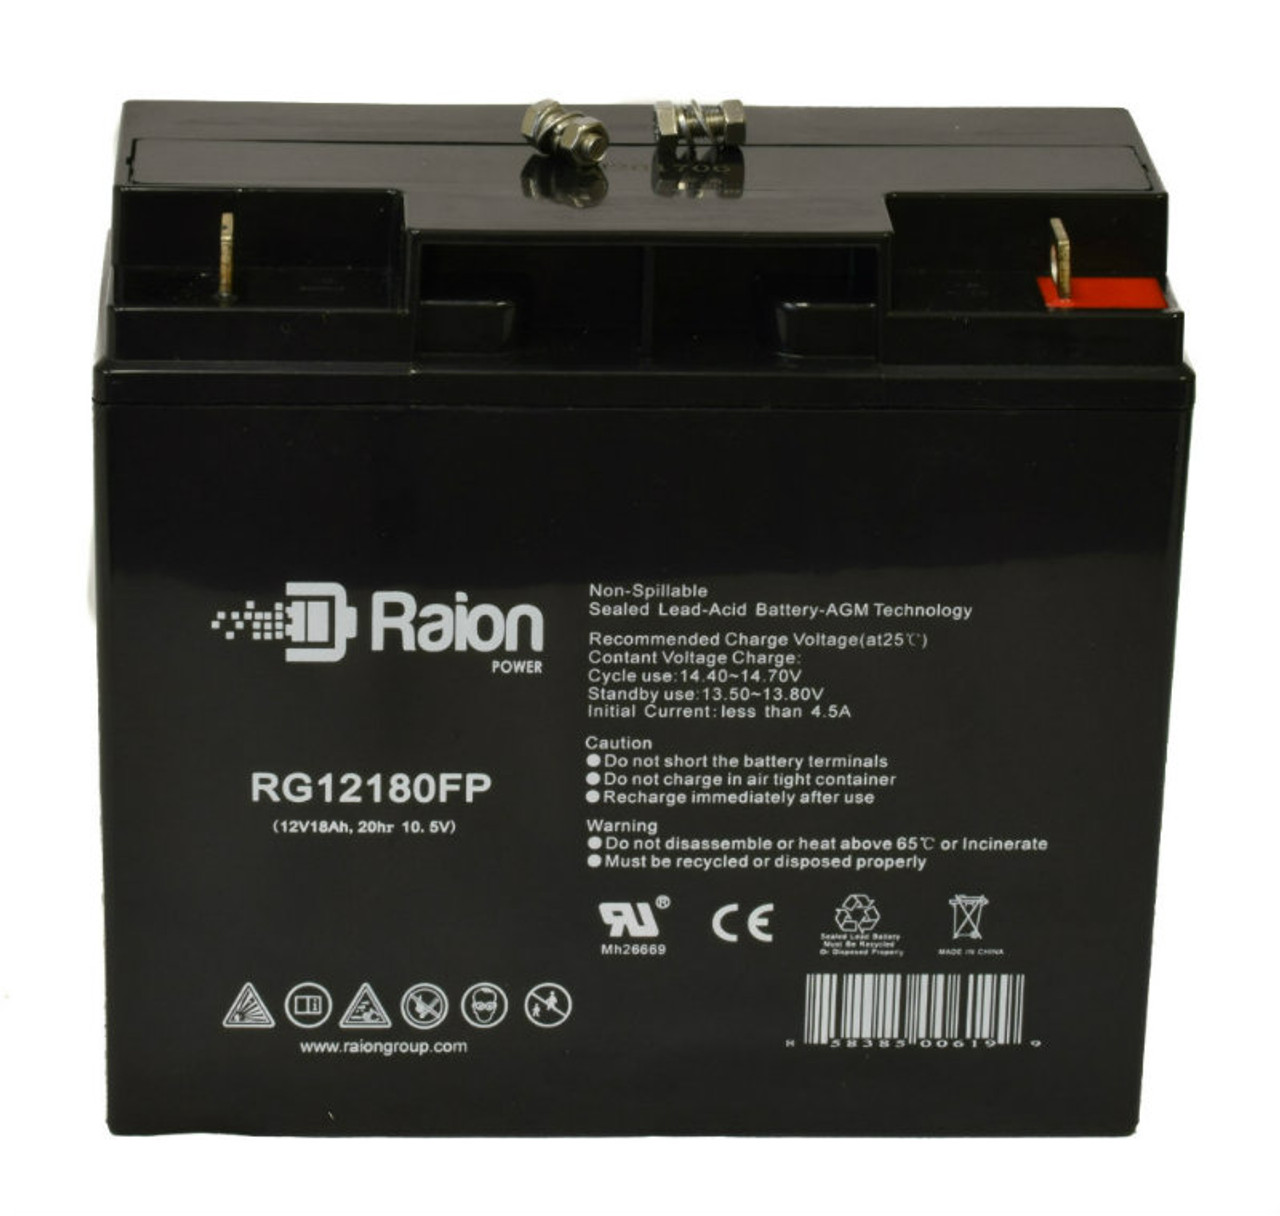 Raion Power RG12180FP 12V 18Ah Lead Acid Battery for Henglypower HL12190